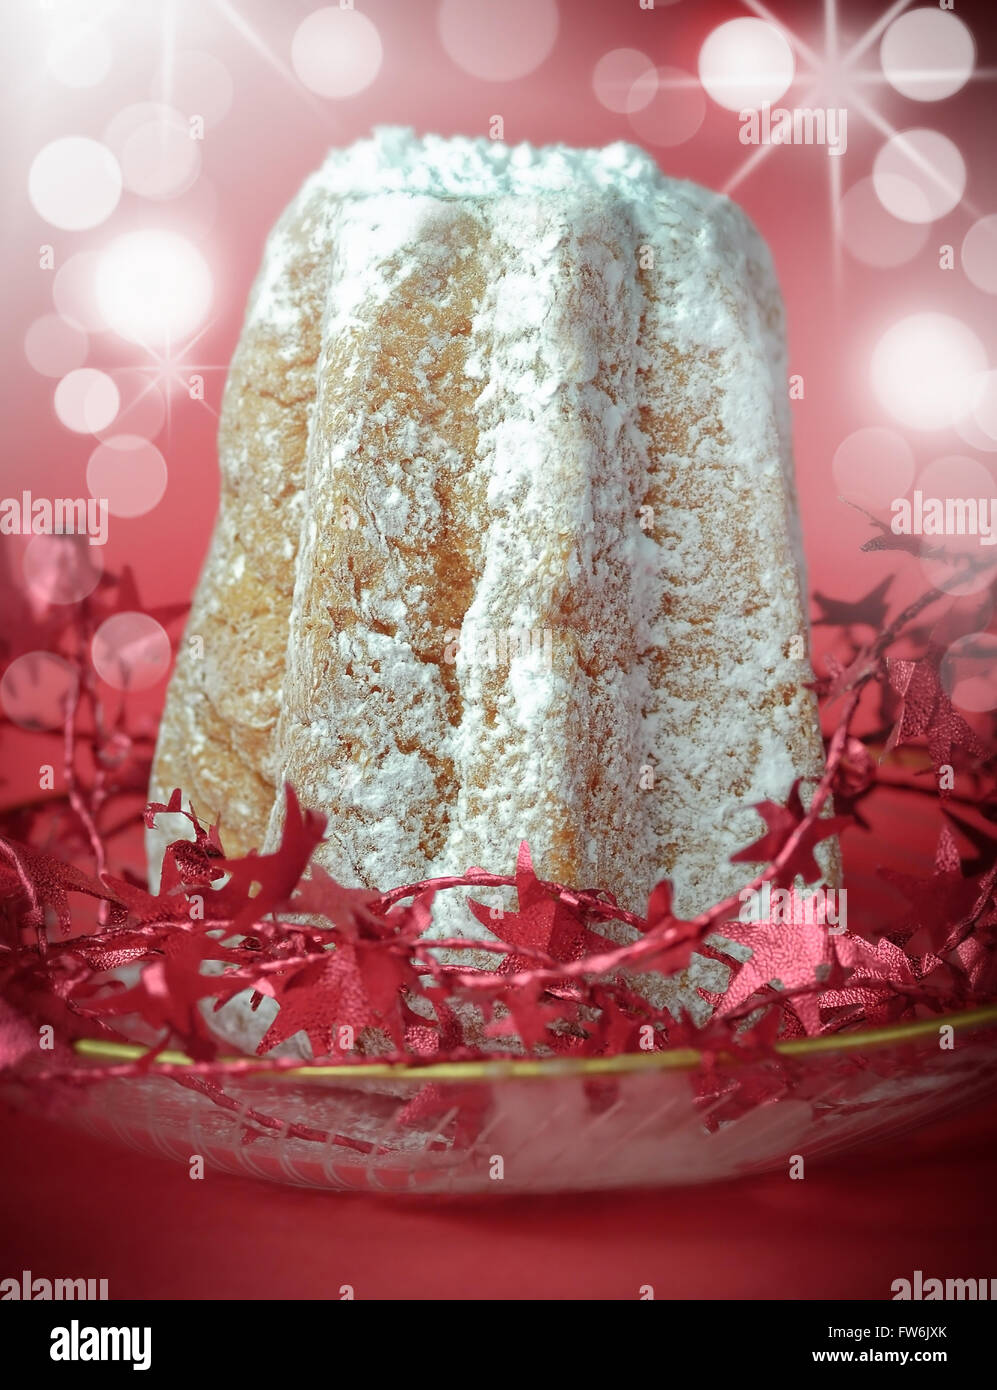 https://c8.alamy.com/comp/FW6JXK/pandoro-traditional-christmas-cake-on-shiny-background-FW6JXK.jpg